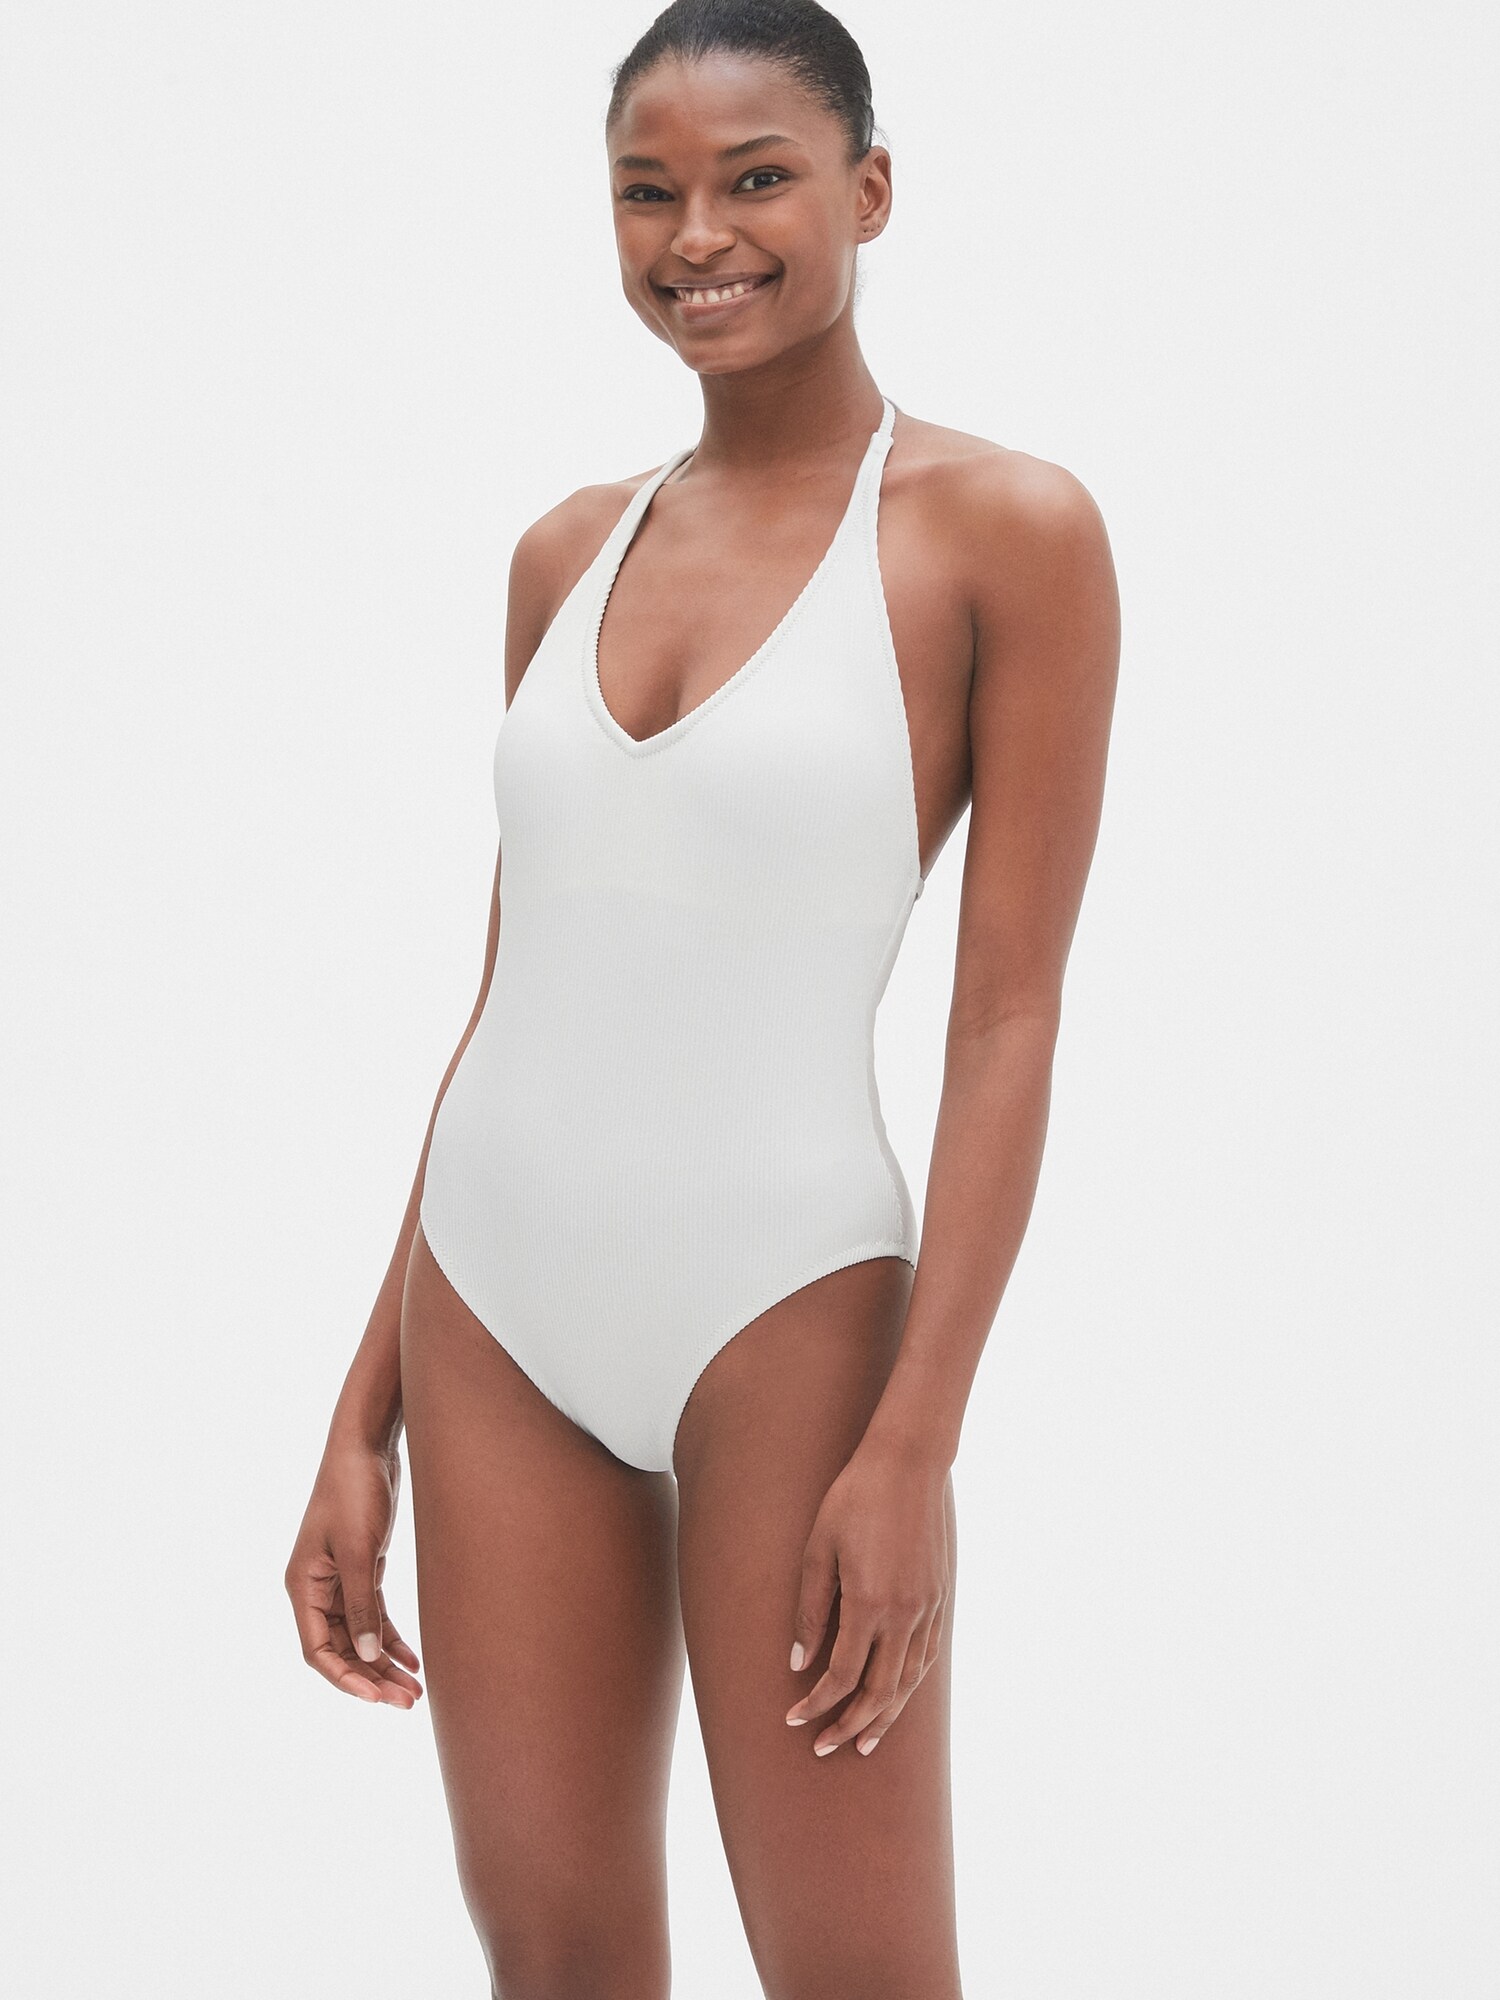 Gap Swimwear Flash Sales, 52% OFF | www.chine-magazine.com